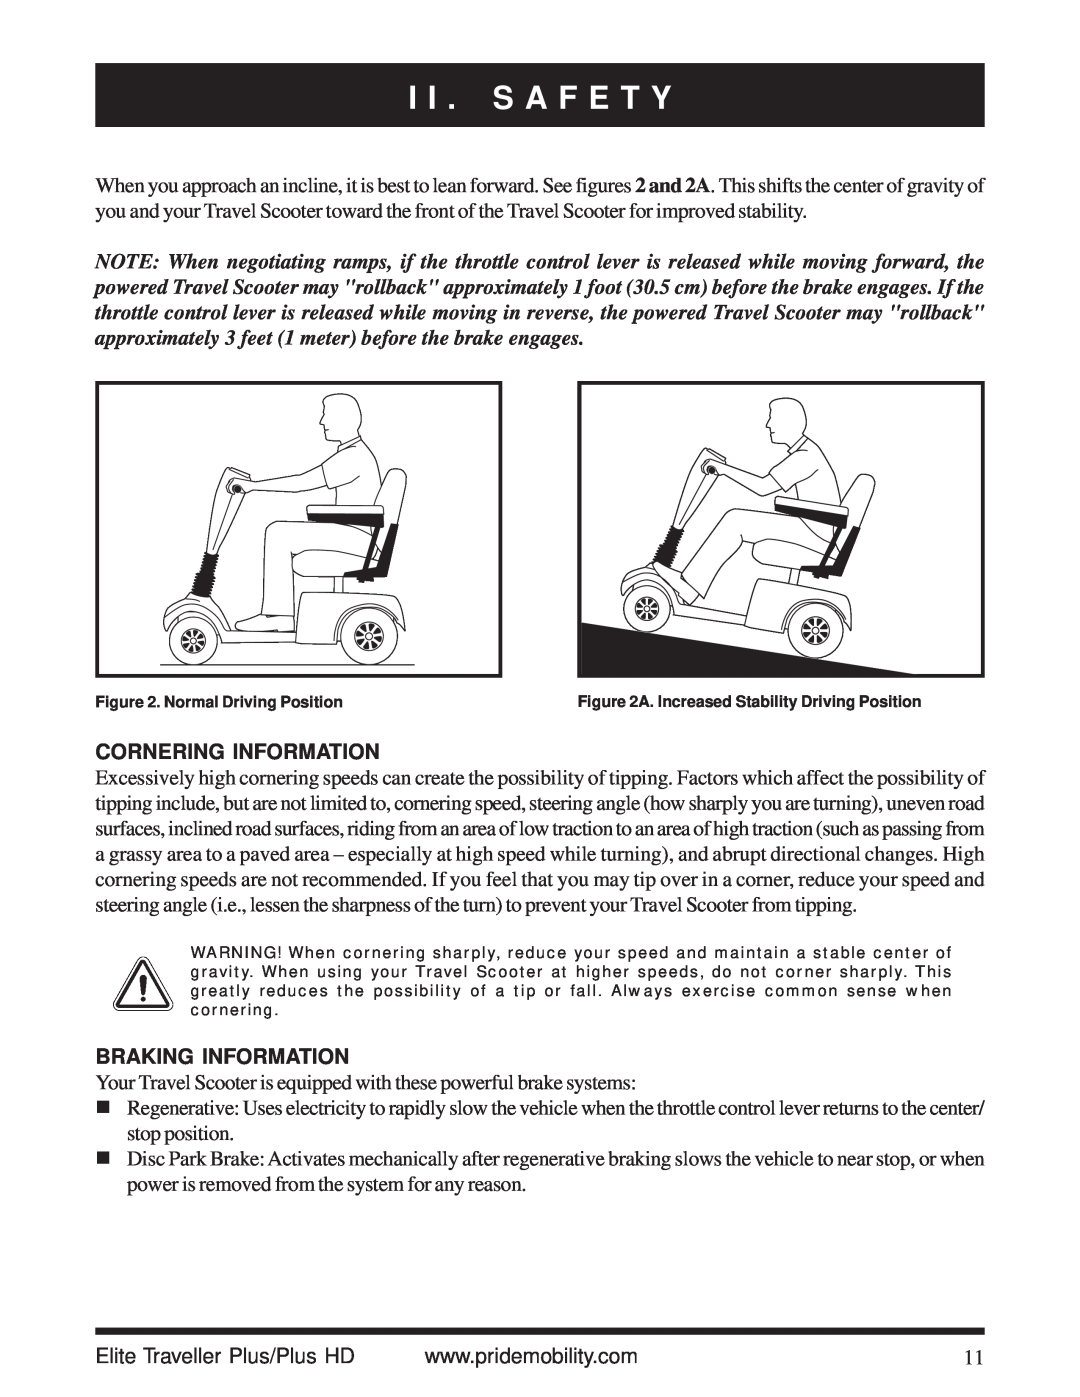 Pride Mobility Traveller Plus HD manual Cornering Information, Braking Information, I I . S A F E T Y 